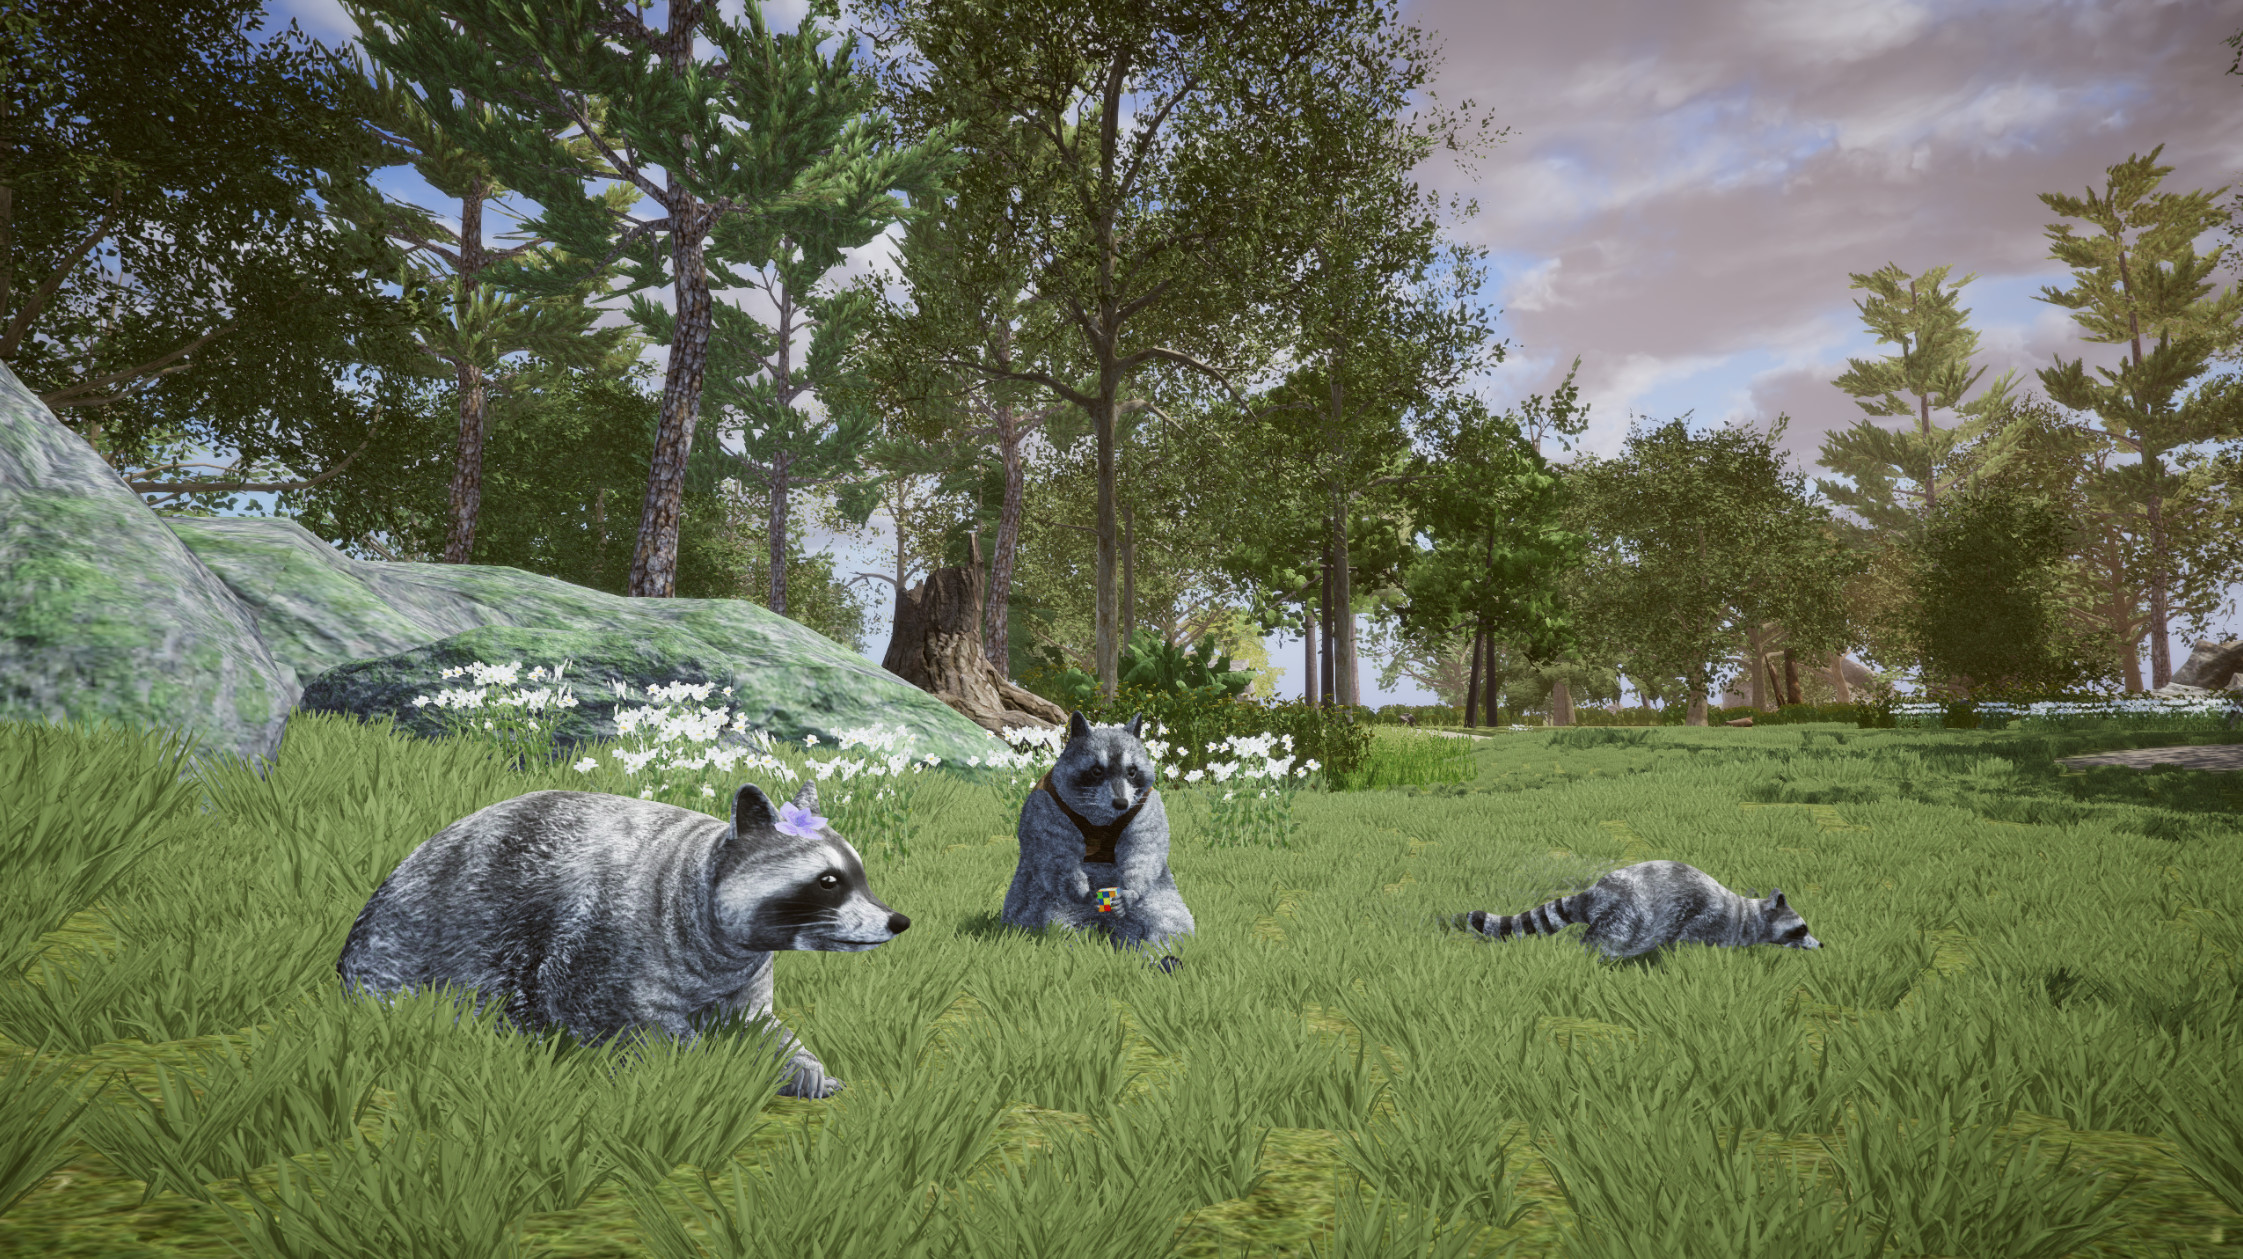 Wanted Raccoon screenshot